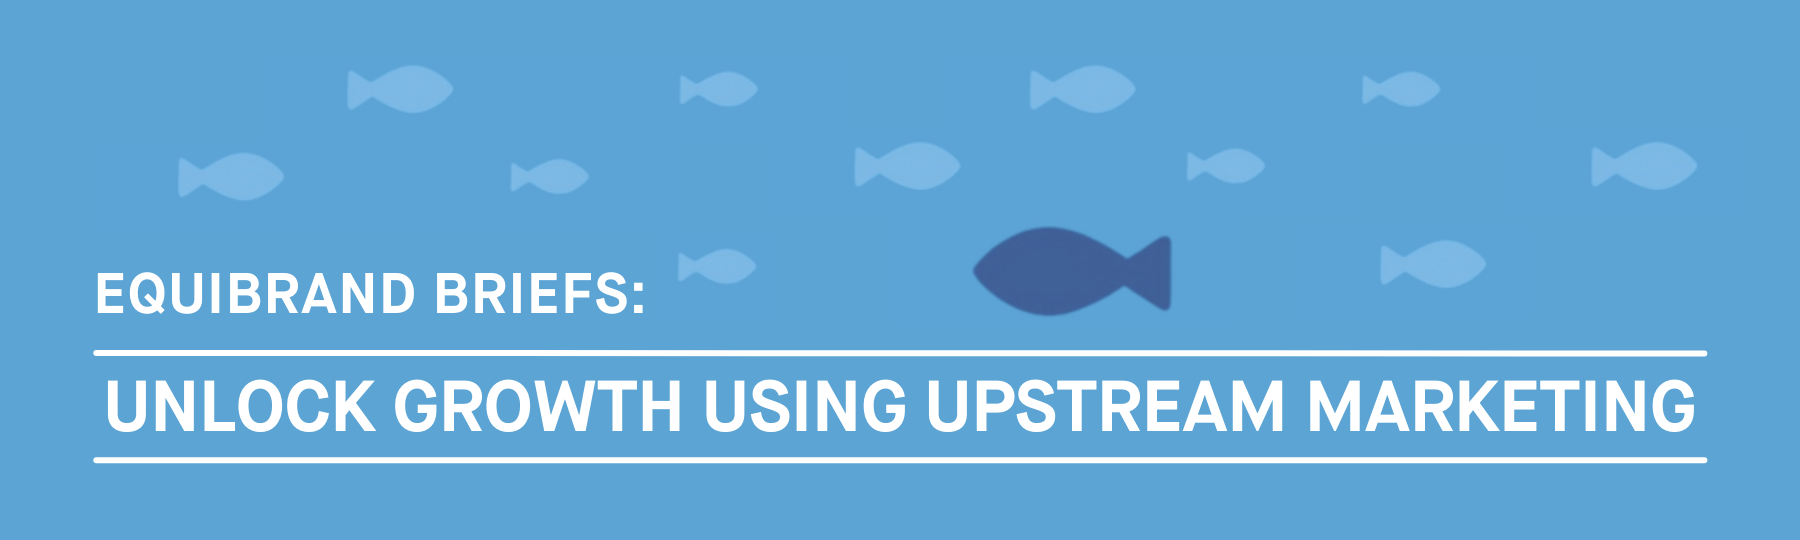 EquiBrand Blog | Unlock growth using upstream marketing